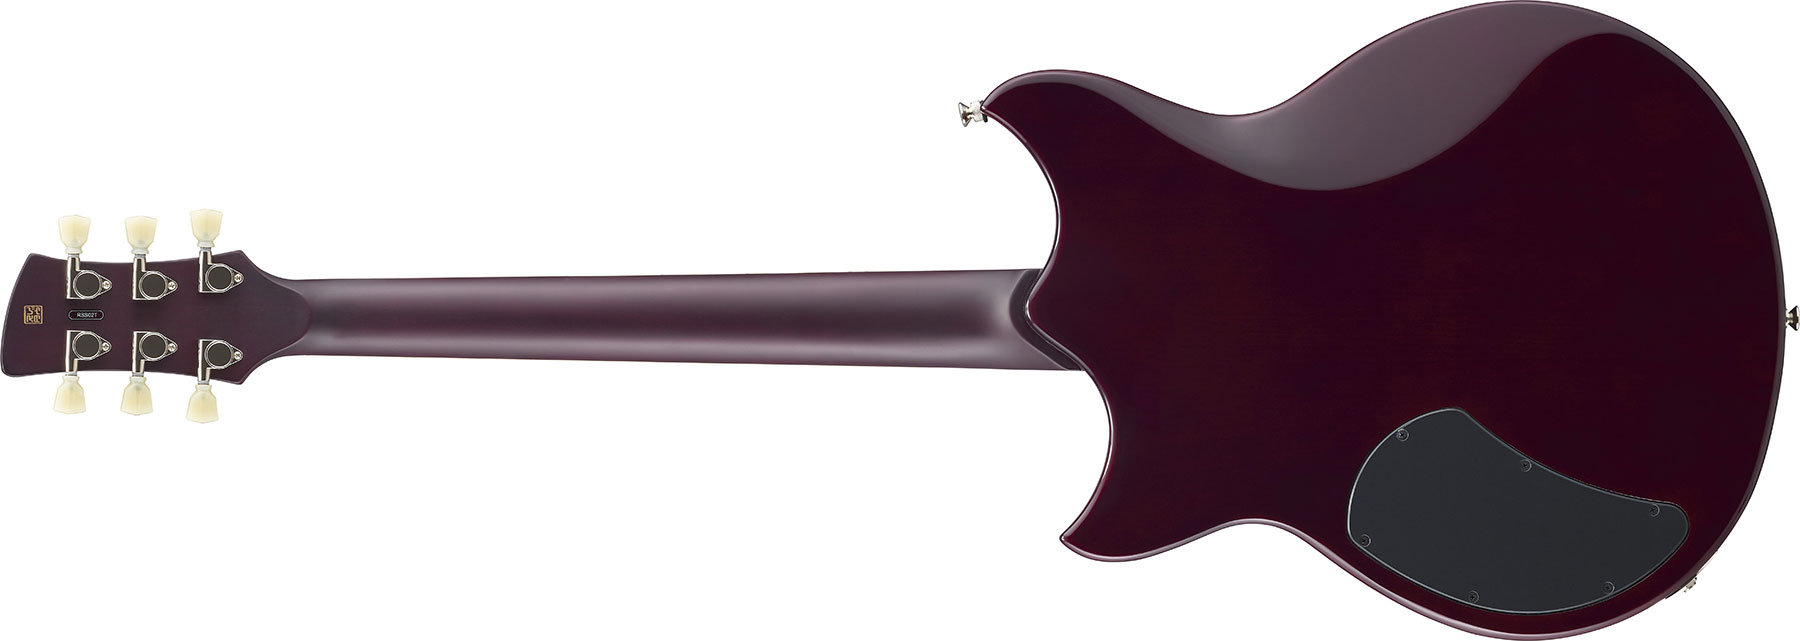 Yamaha Rss02t Revstar Standard 2p90 Ht Rw - Hot Merlot - Guitarra eléctrica de doble corte. - Variation 2